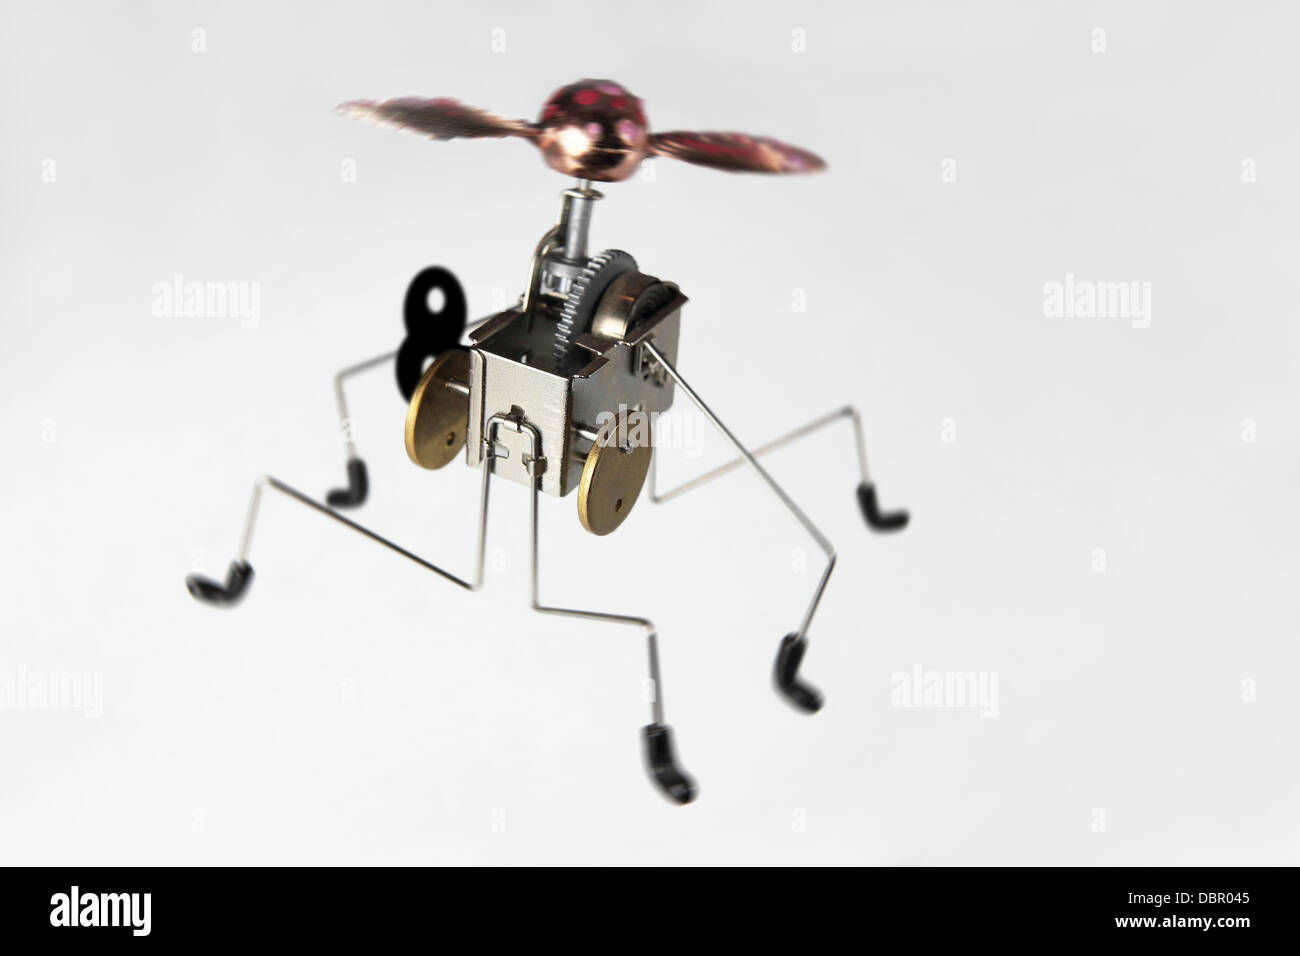 a strange metal sculpture, an alien cricket, jumpy spring mechanic with propeller...on a light surface. Stock Photo